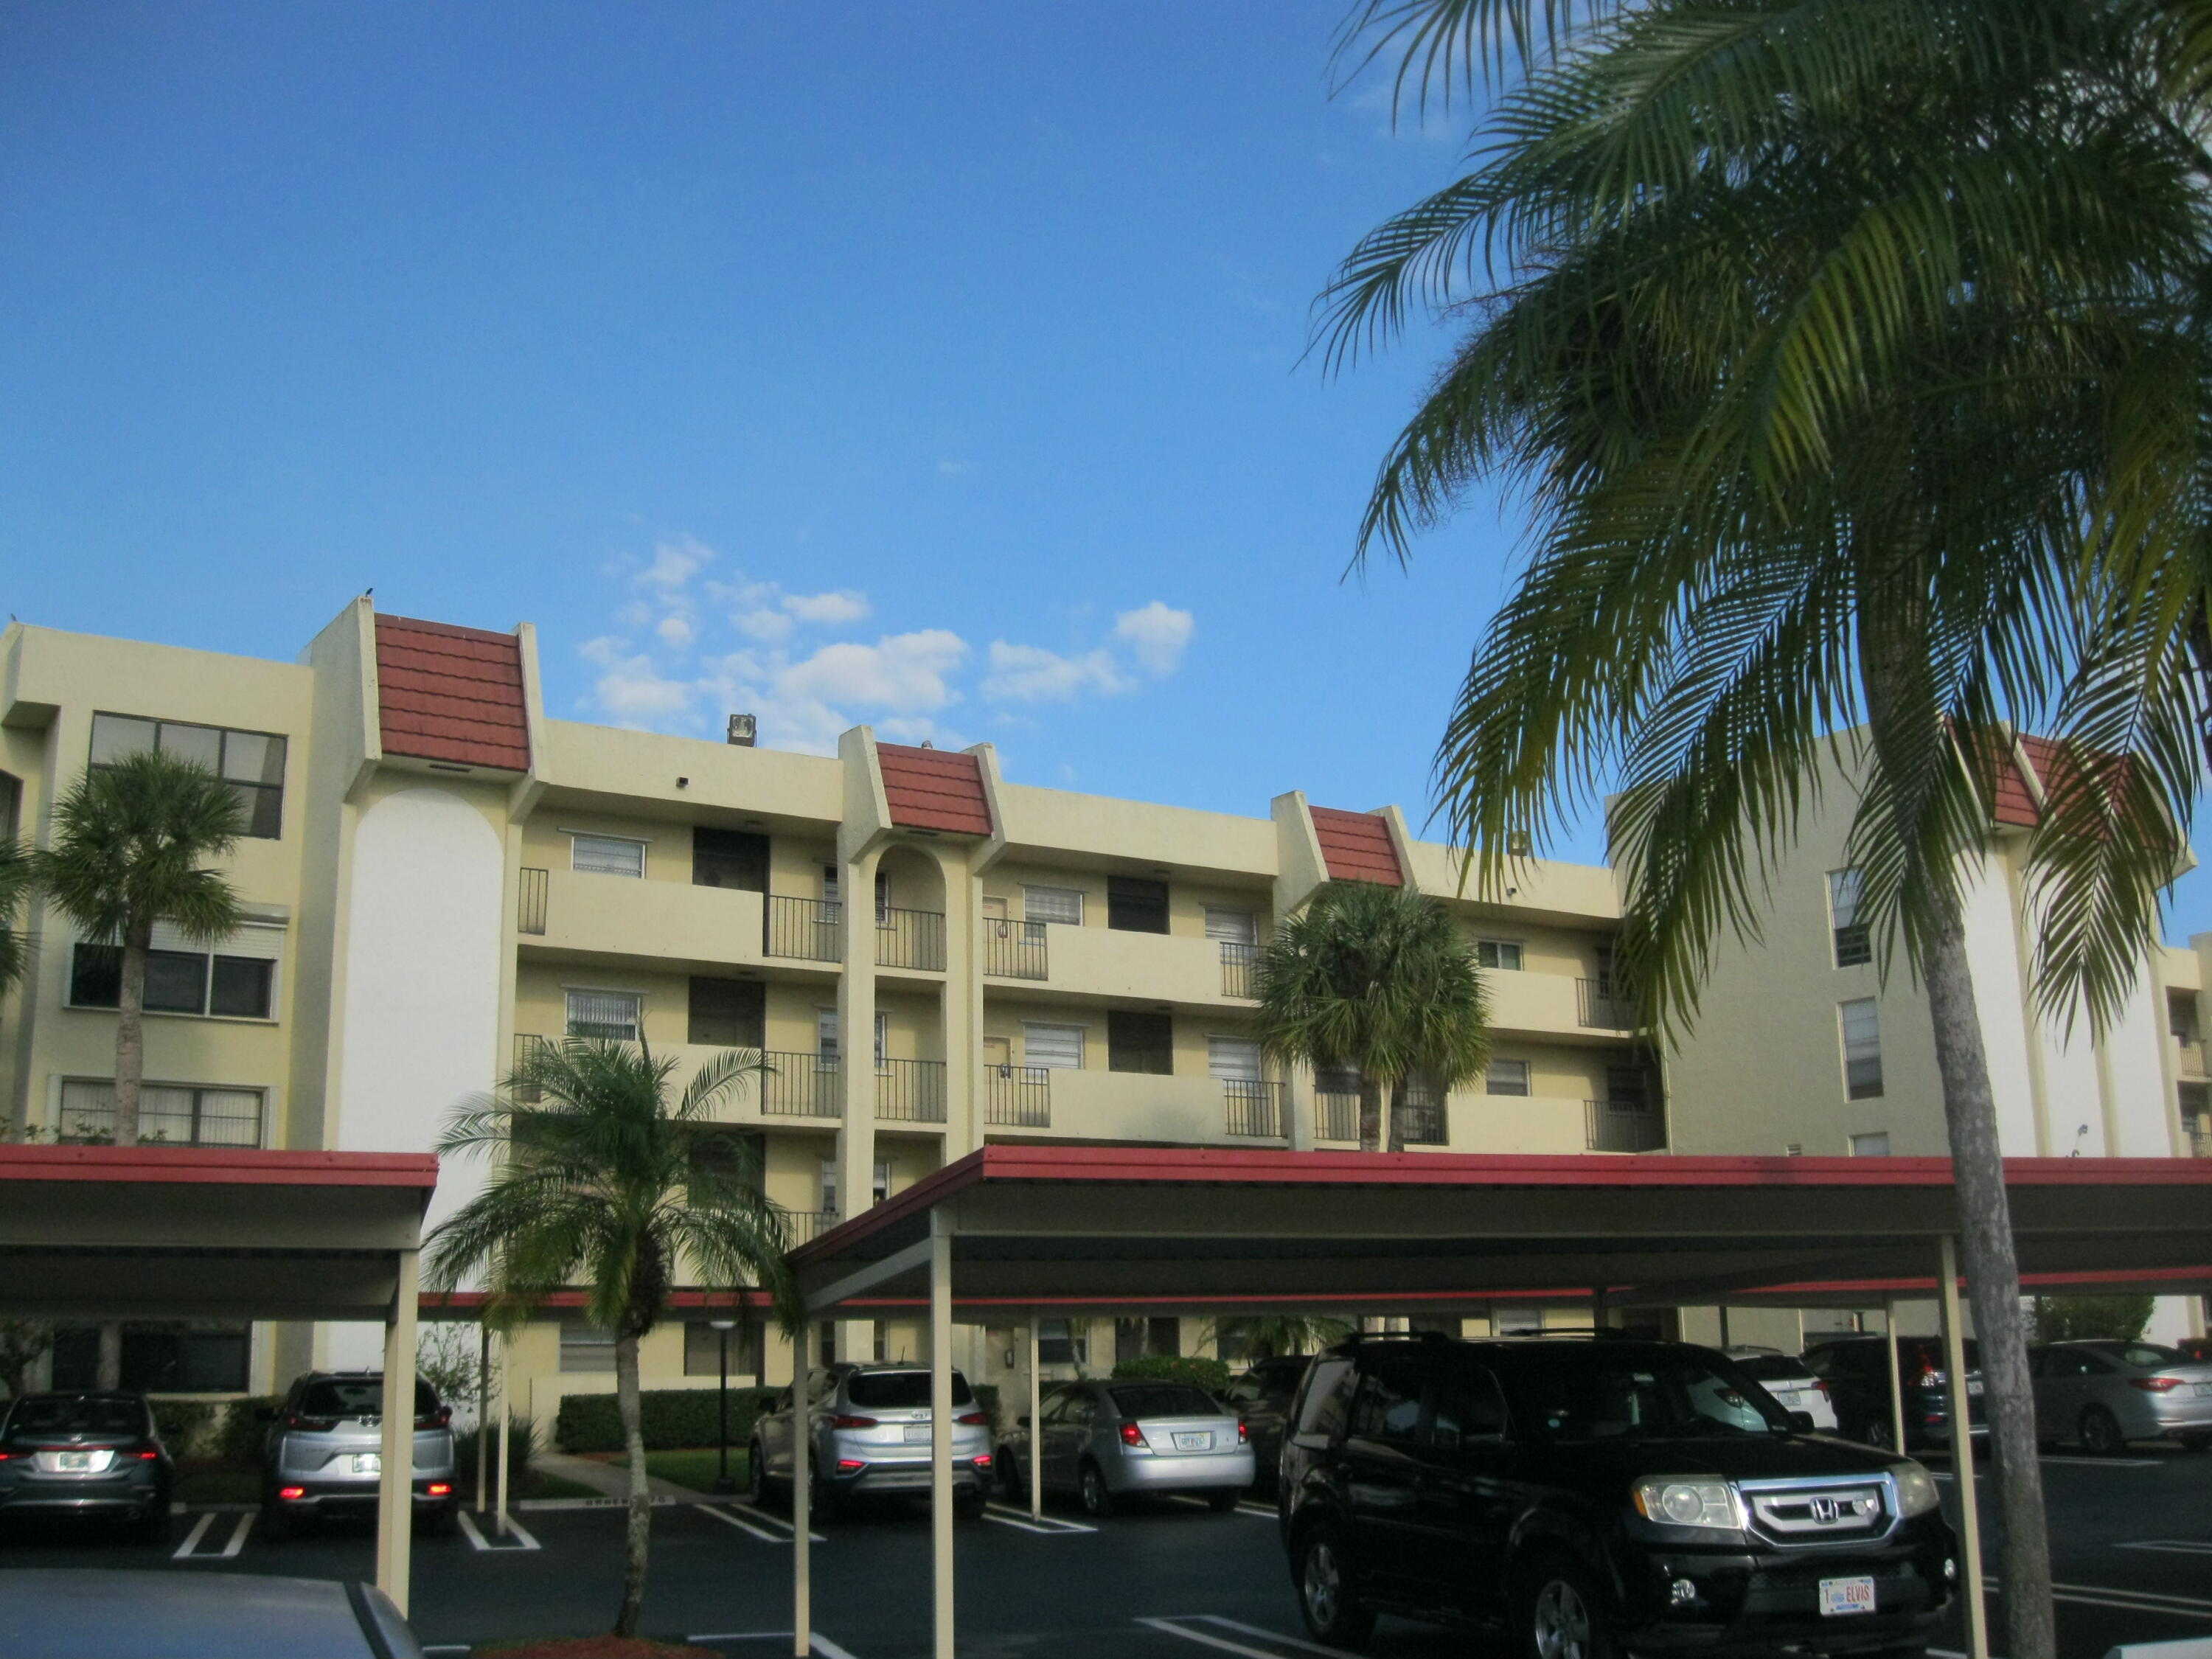 View Boca Raton, FL 33428 residential property